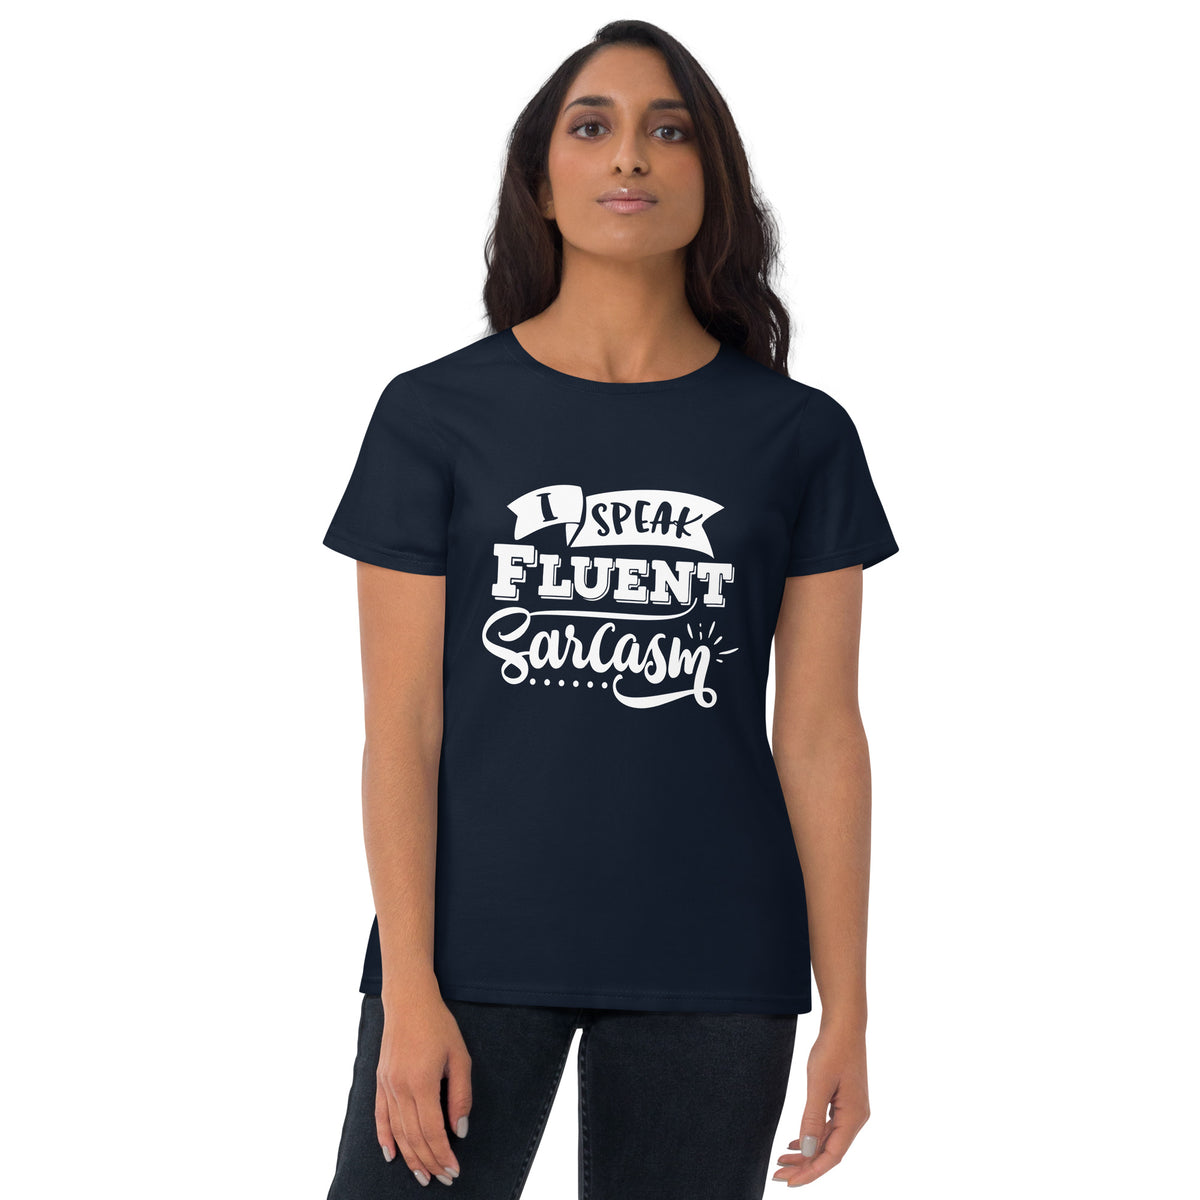 I Speak Fluent Sarcasm Women's Short Sleeve T-Shirt